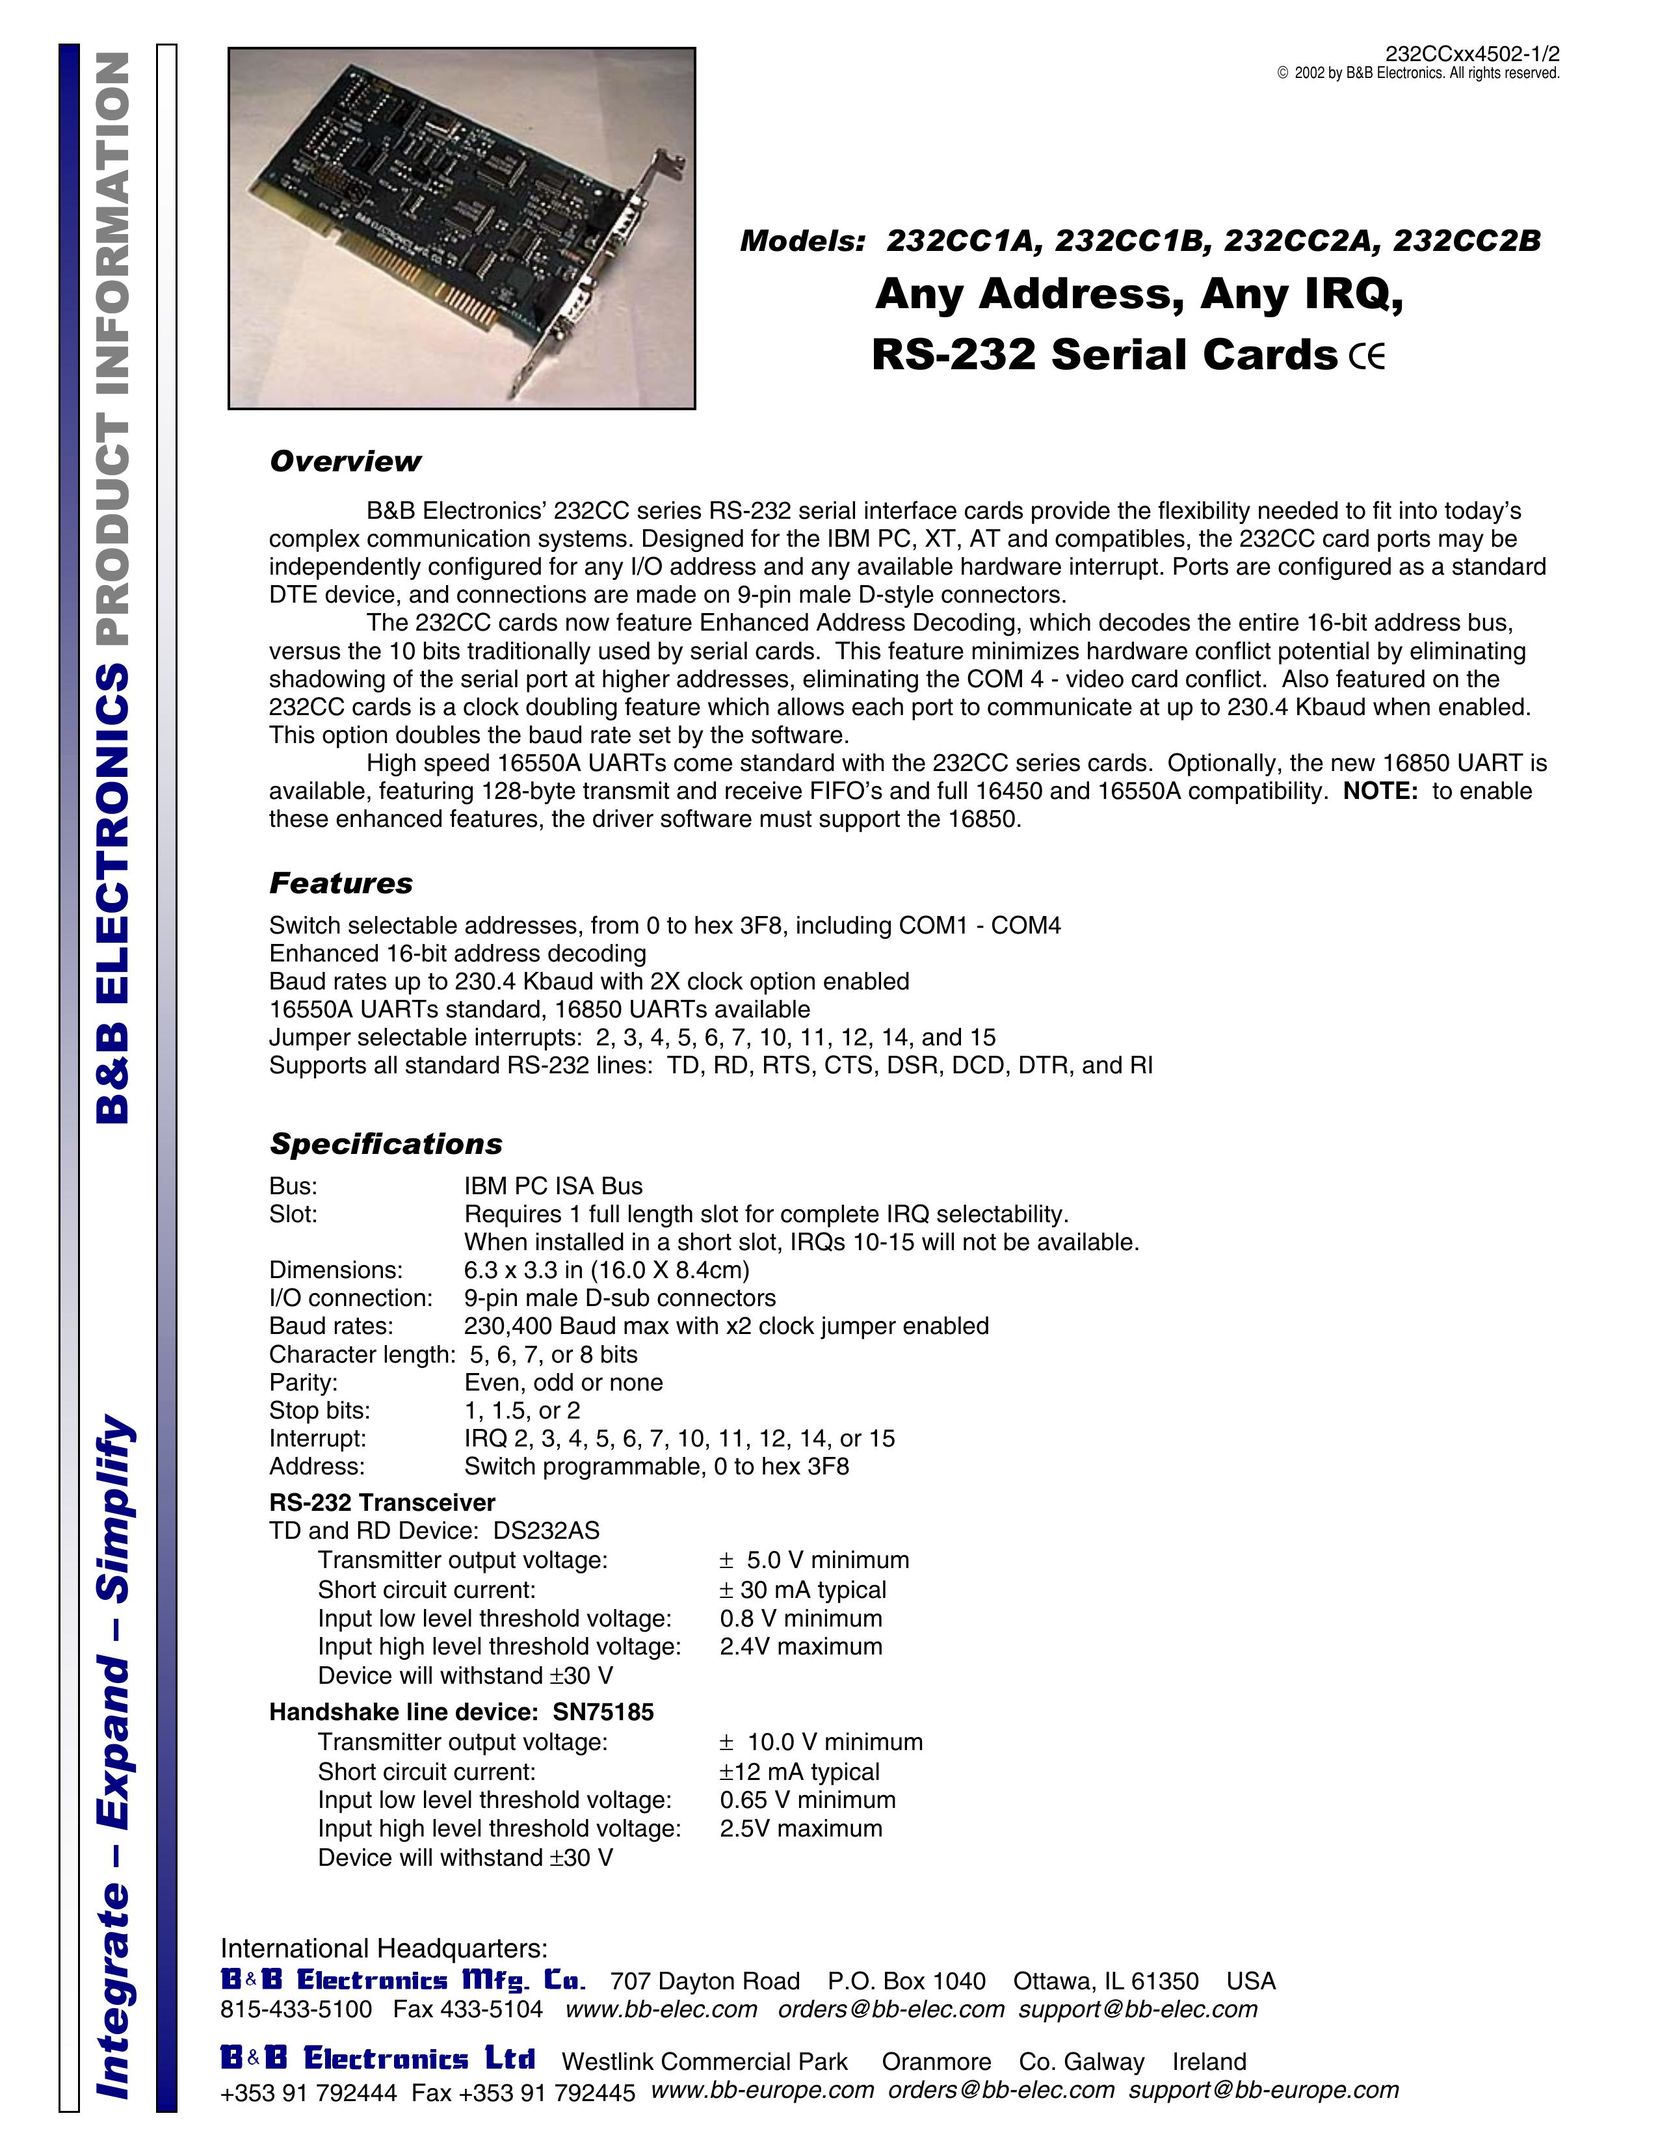 B&B Electronics 232CC1B Network Card User Manual